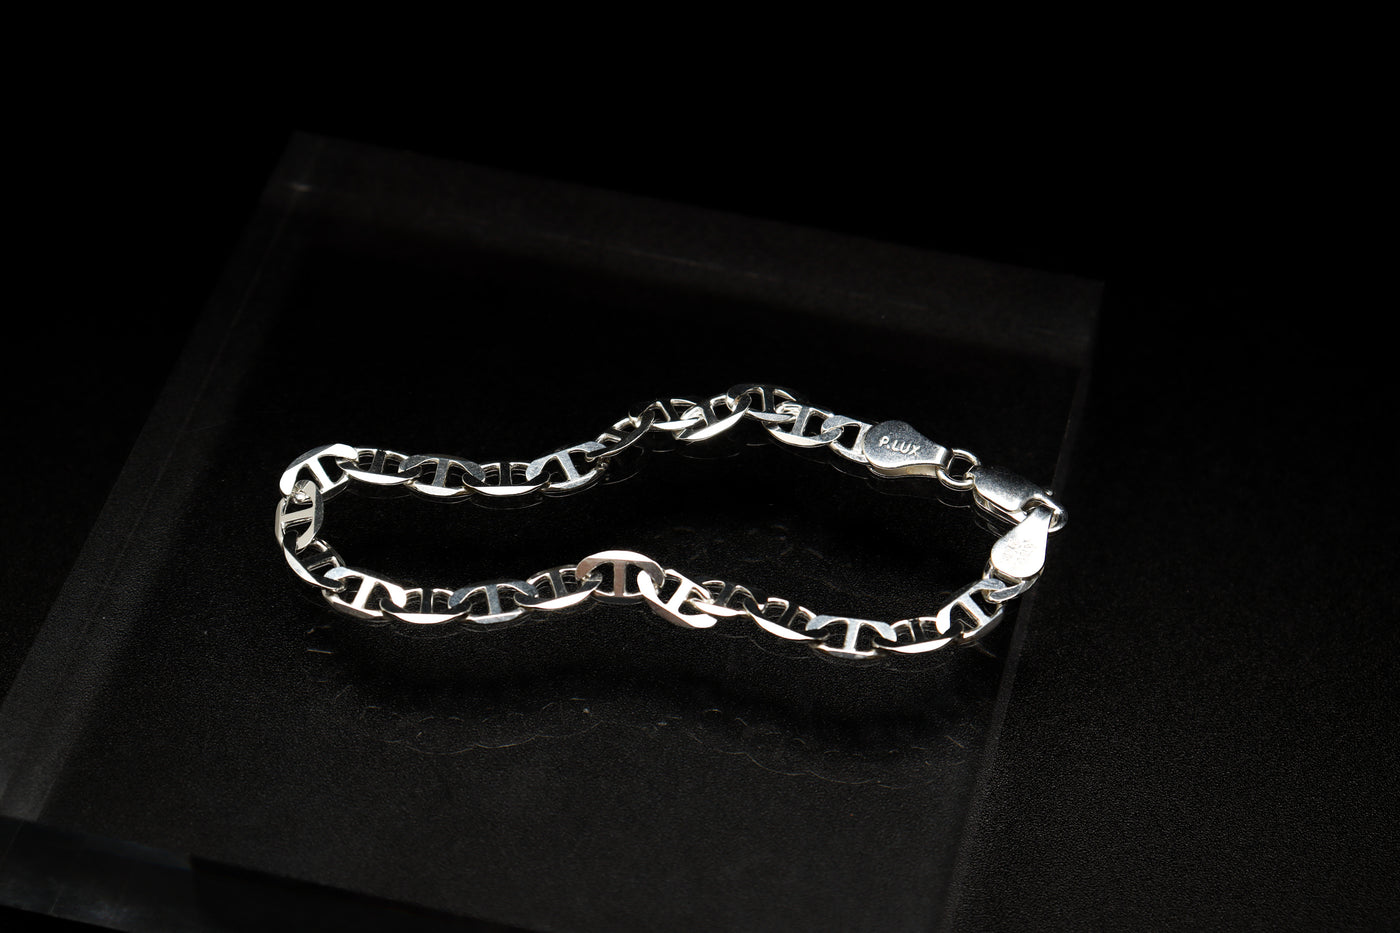 Silver Mariner Chain Link Bracelet